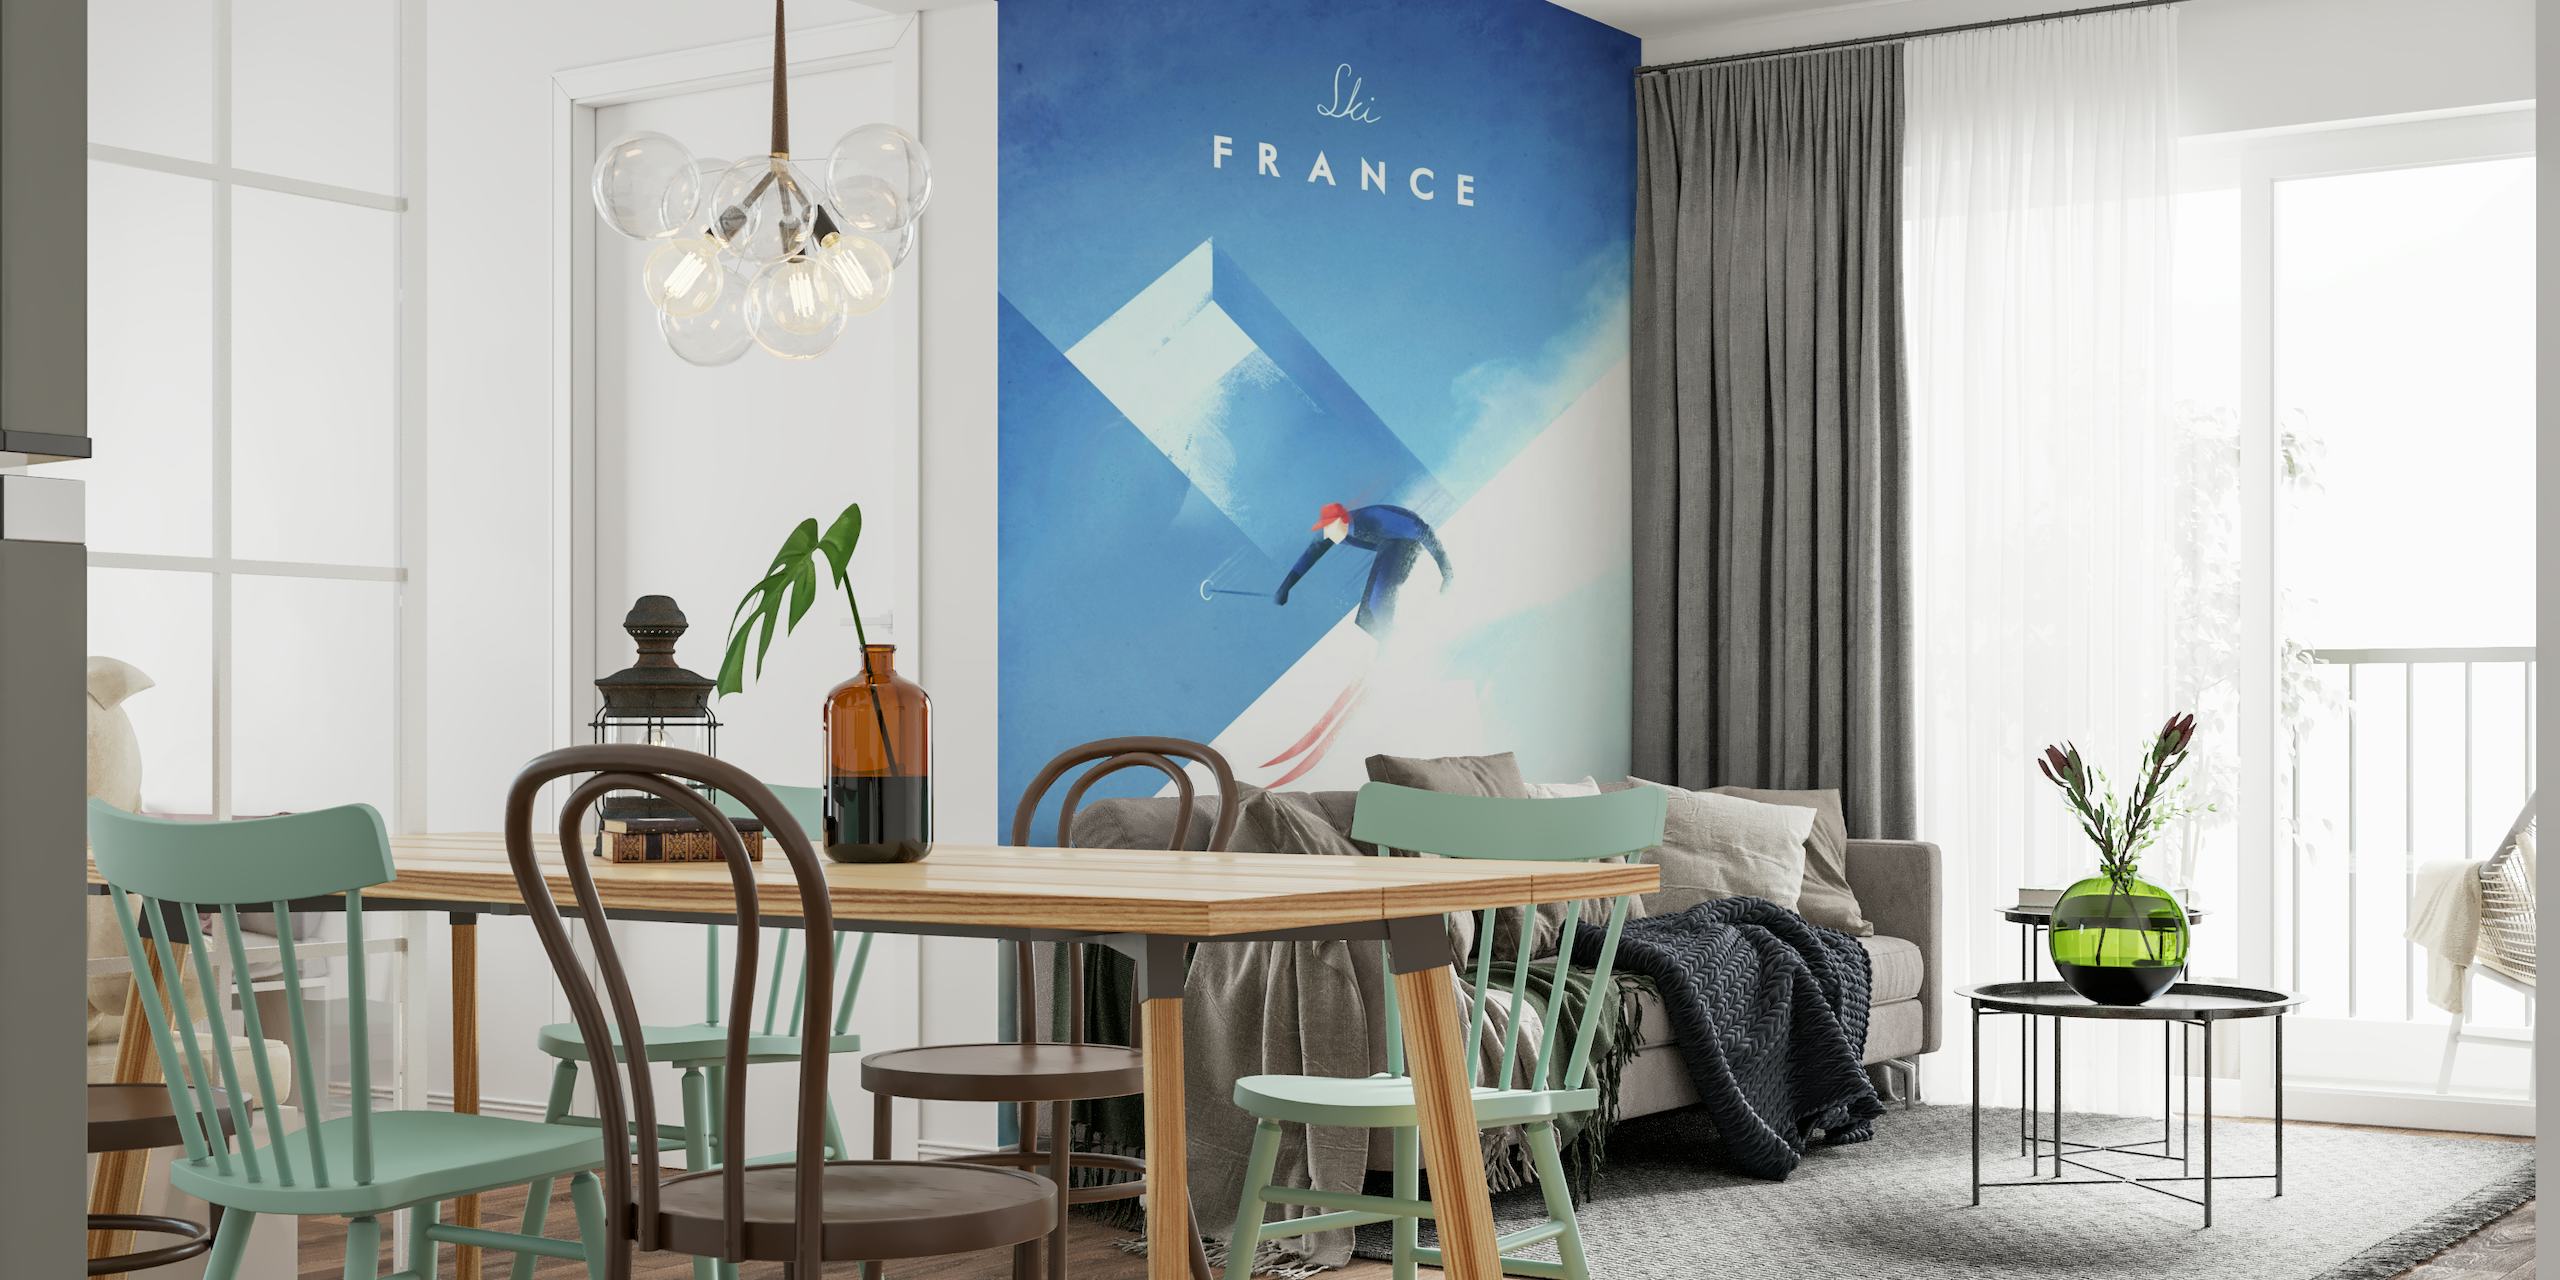 Ski France Travel Poster ταπετσαρία